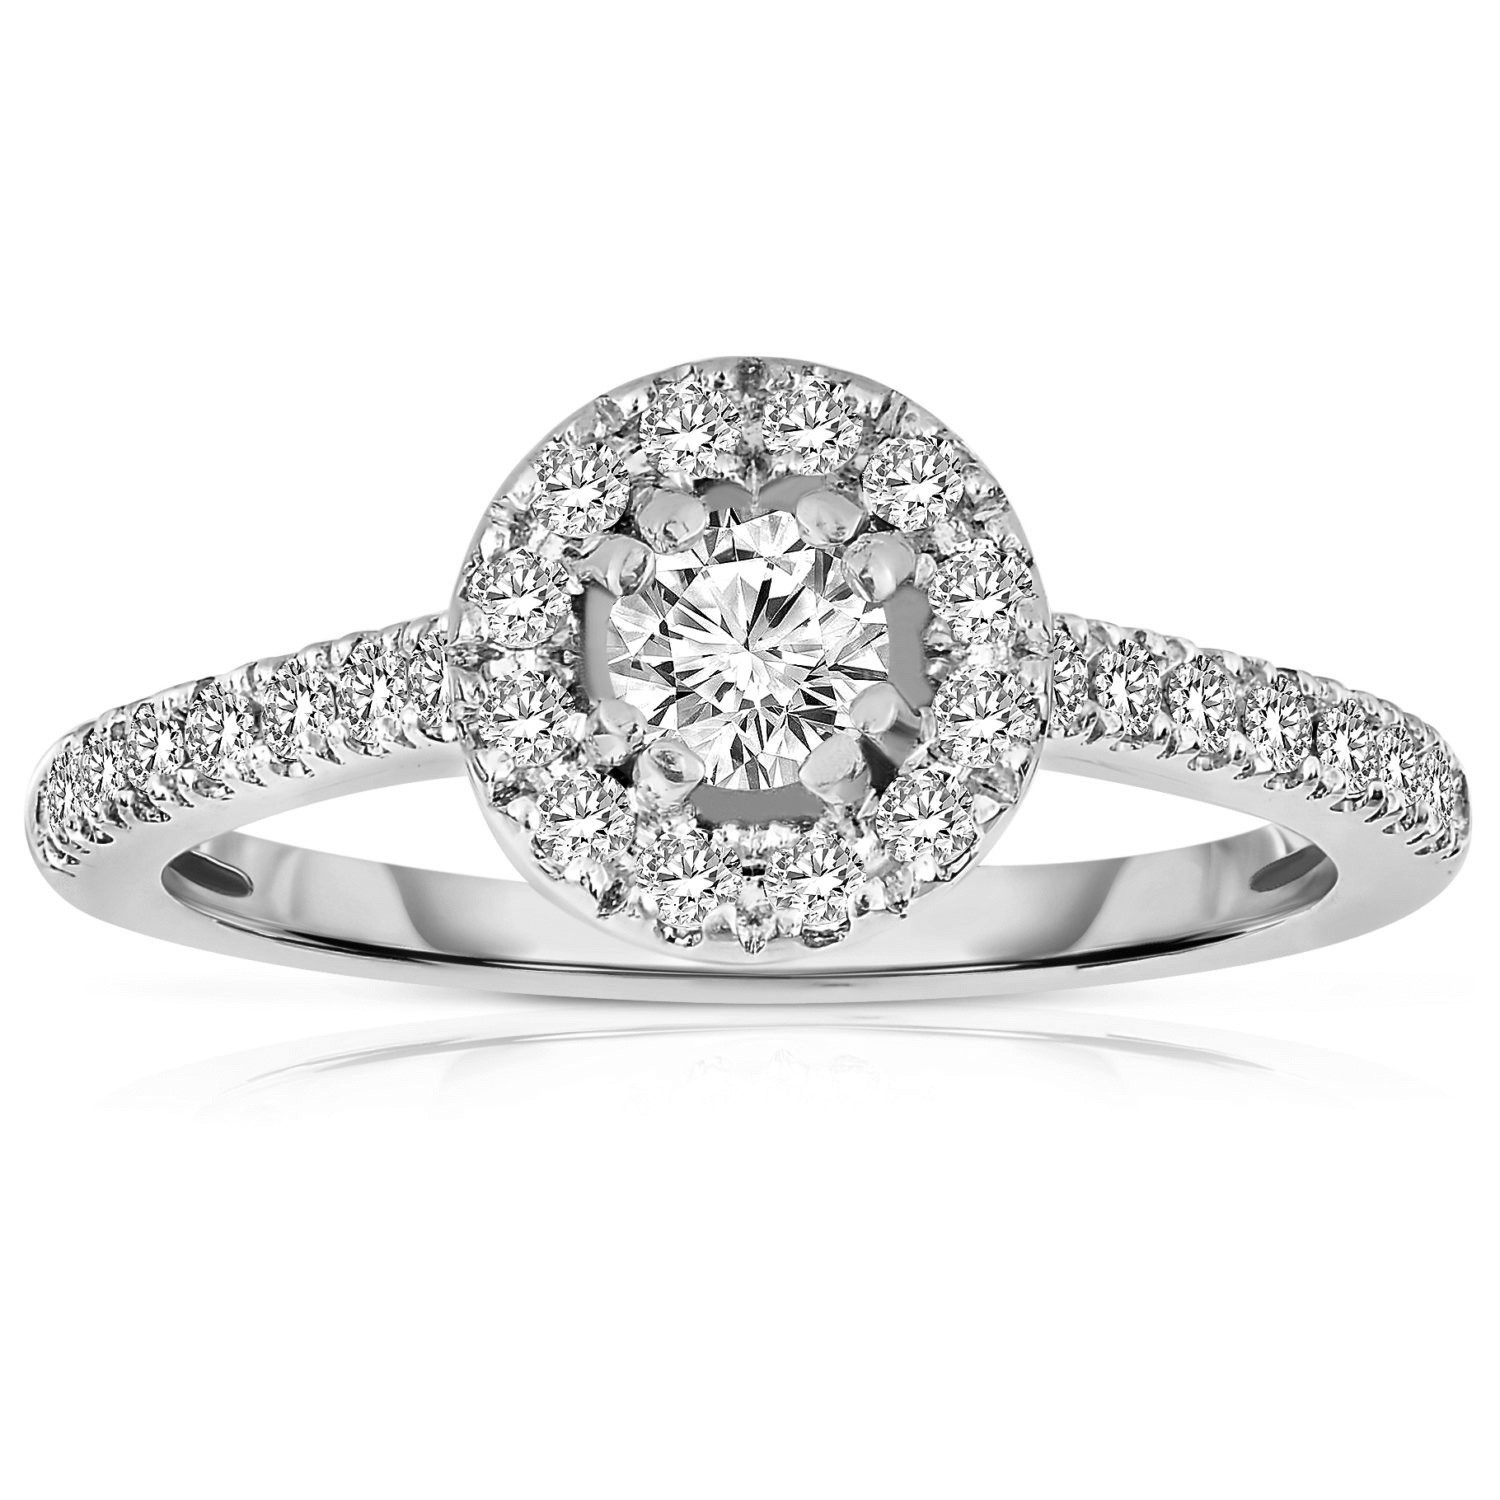 Round Halo Diamond Engagement Rings
 Half Carat Round cut Halo Diamond Engagement Ring in White